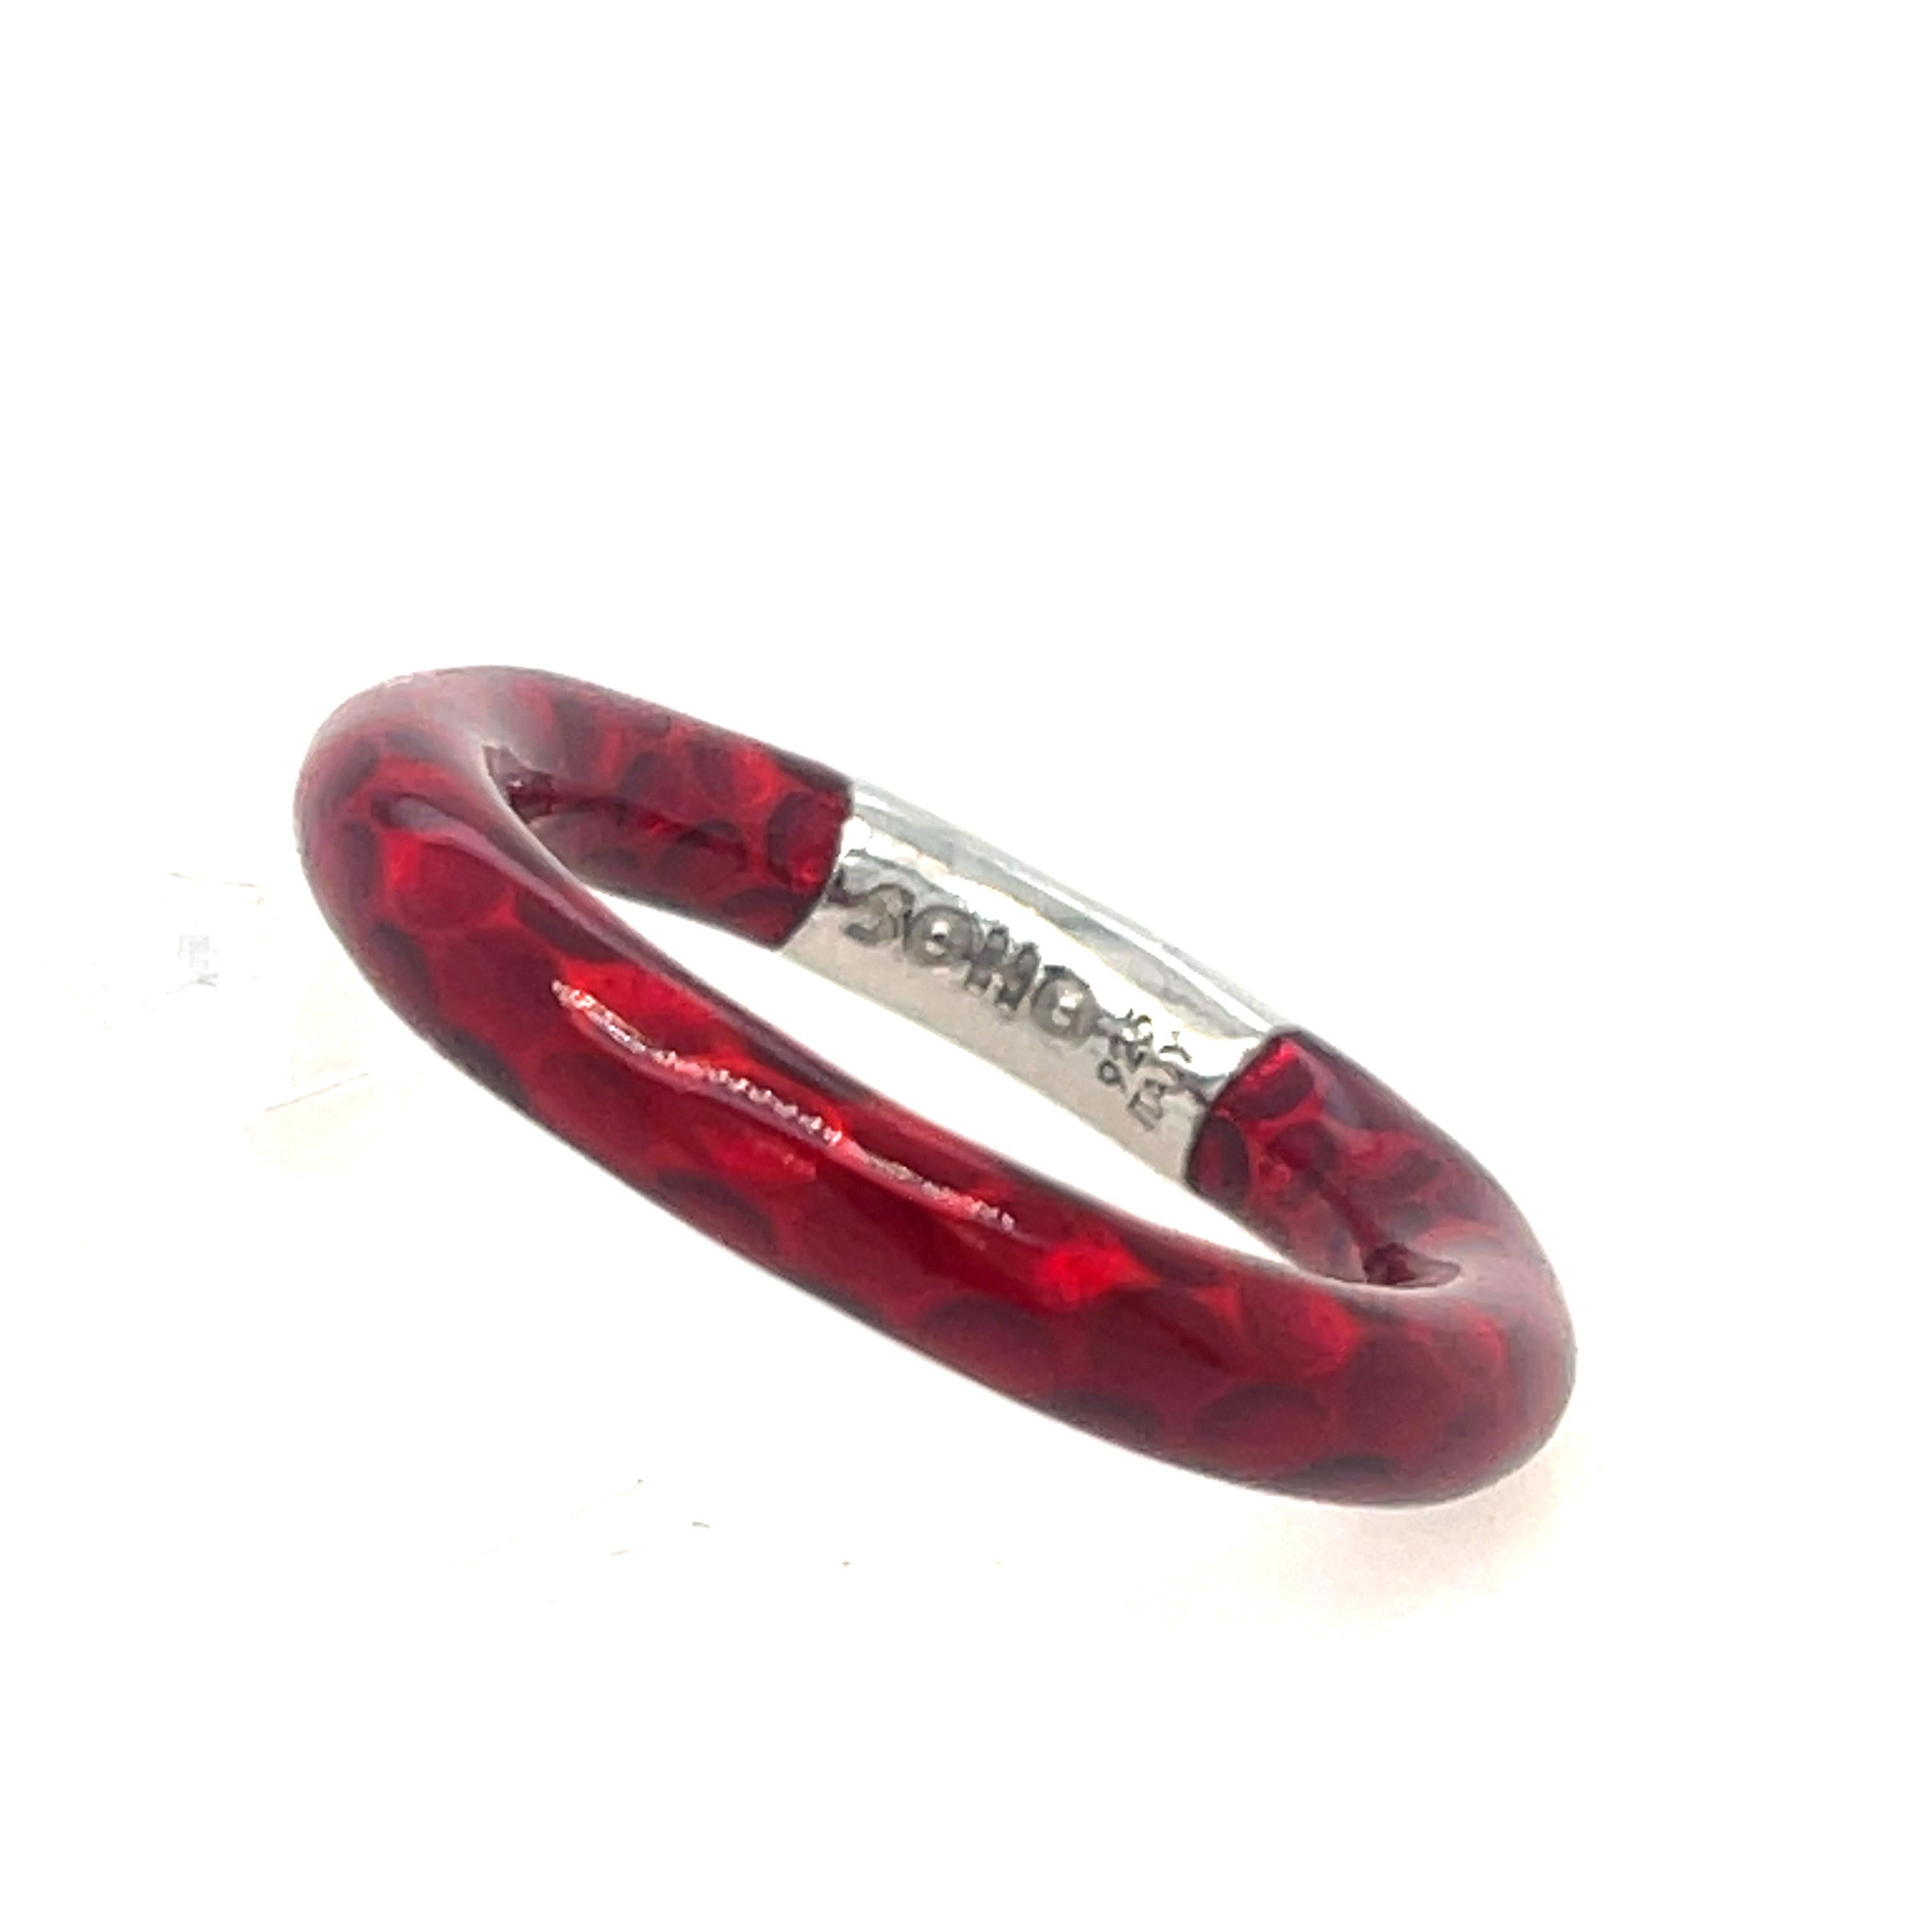 Sterling Silver Red Enamel Ring from Acclaimed Italian Designer Soho

sz 7.25